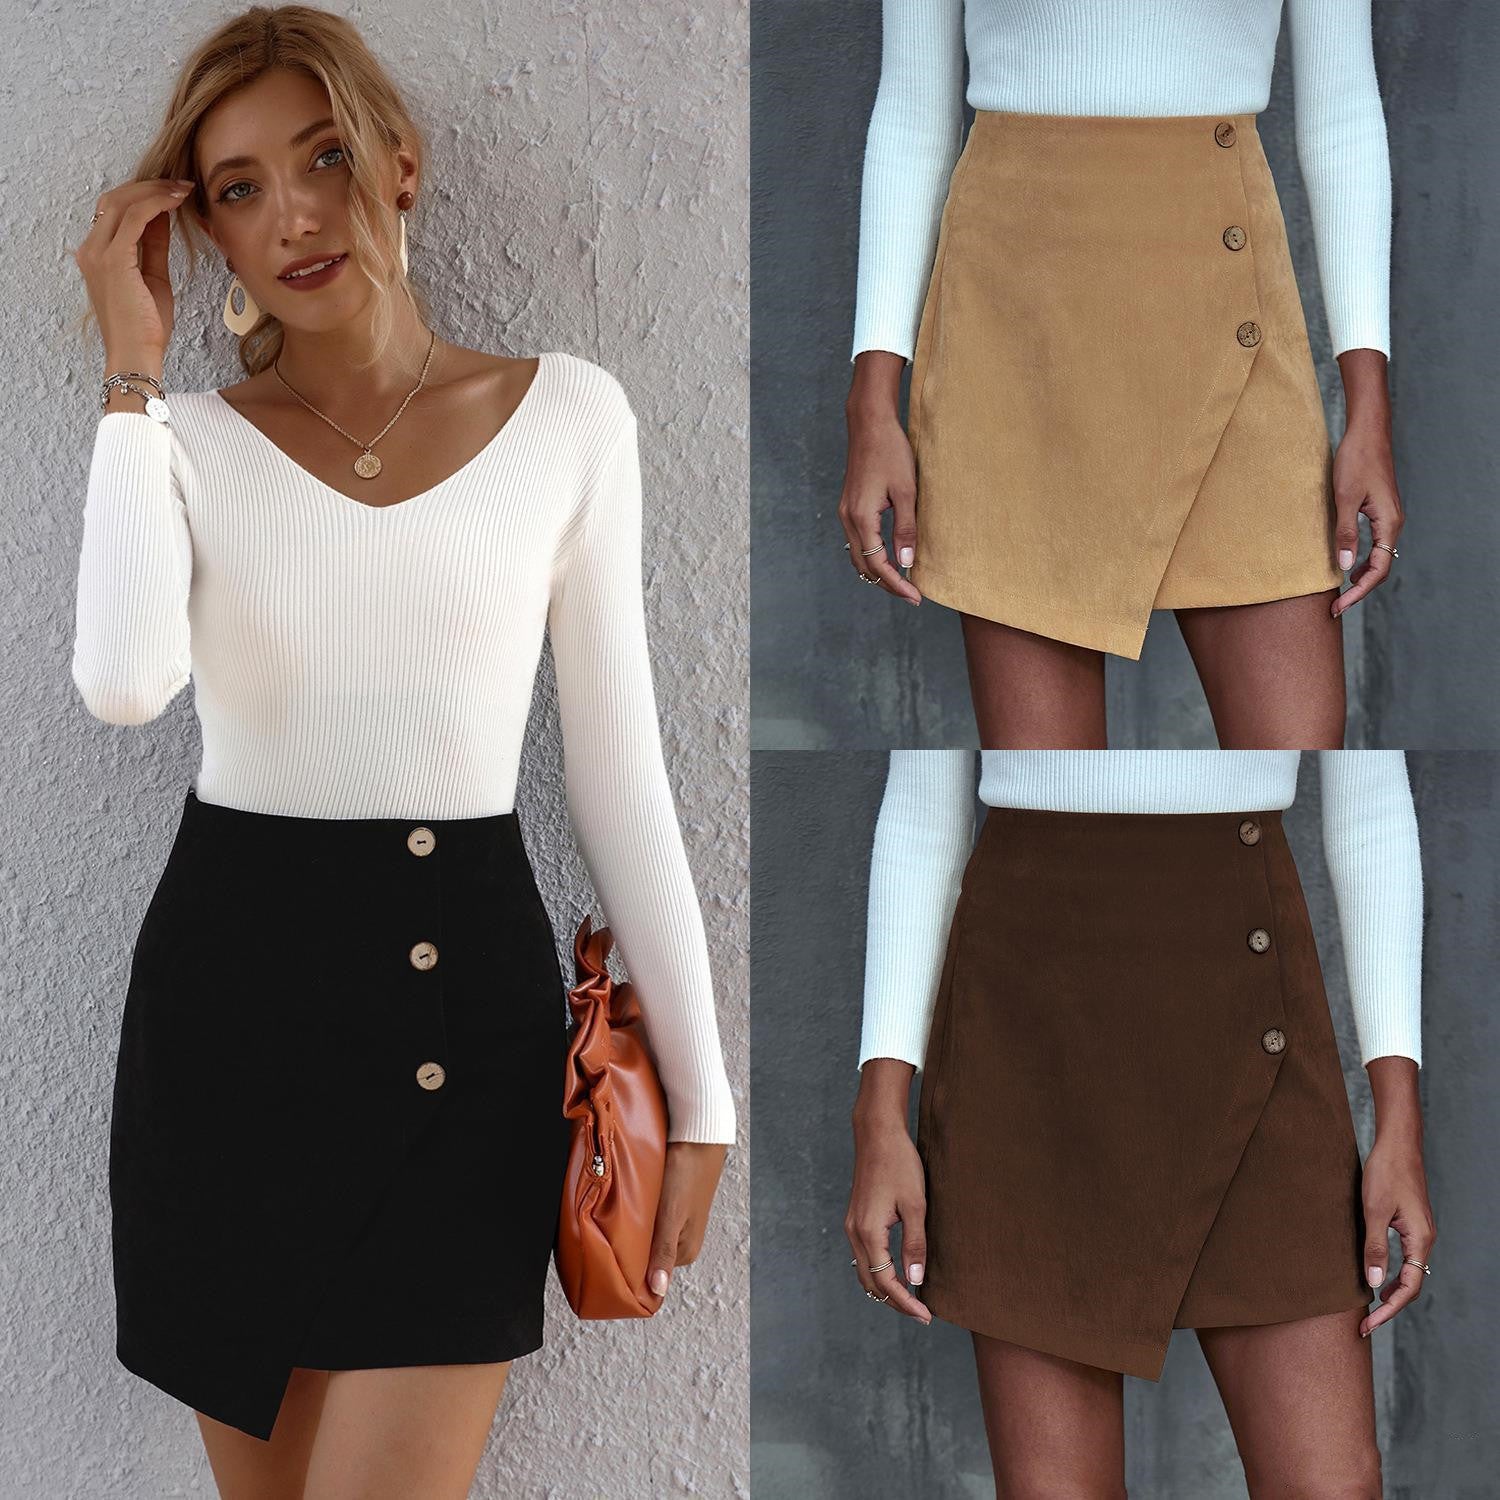 New S Line Skirt Shows A Slim Half Length Skirt